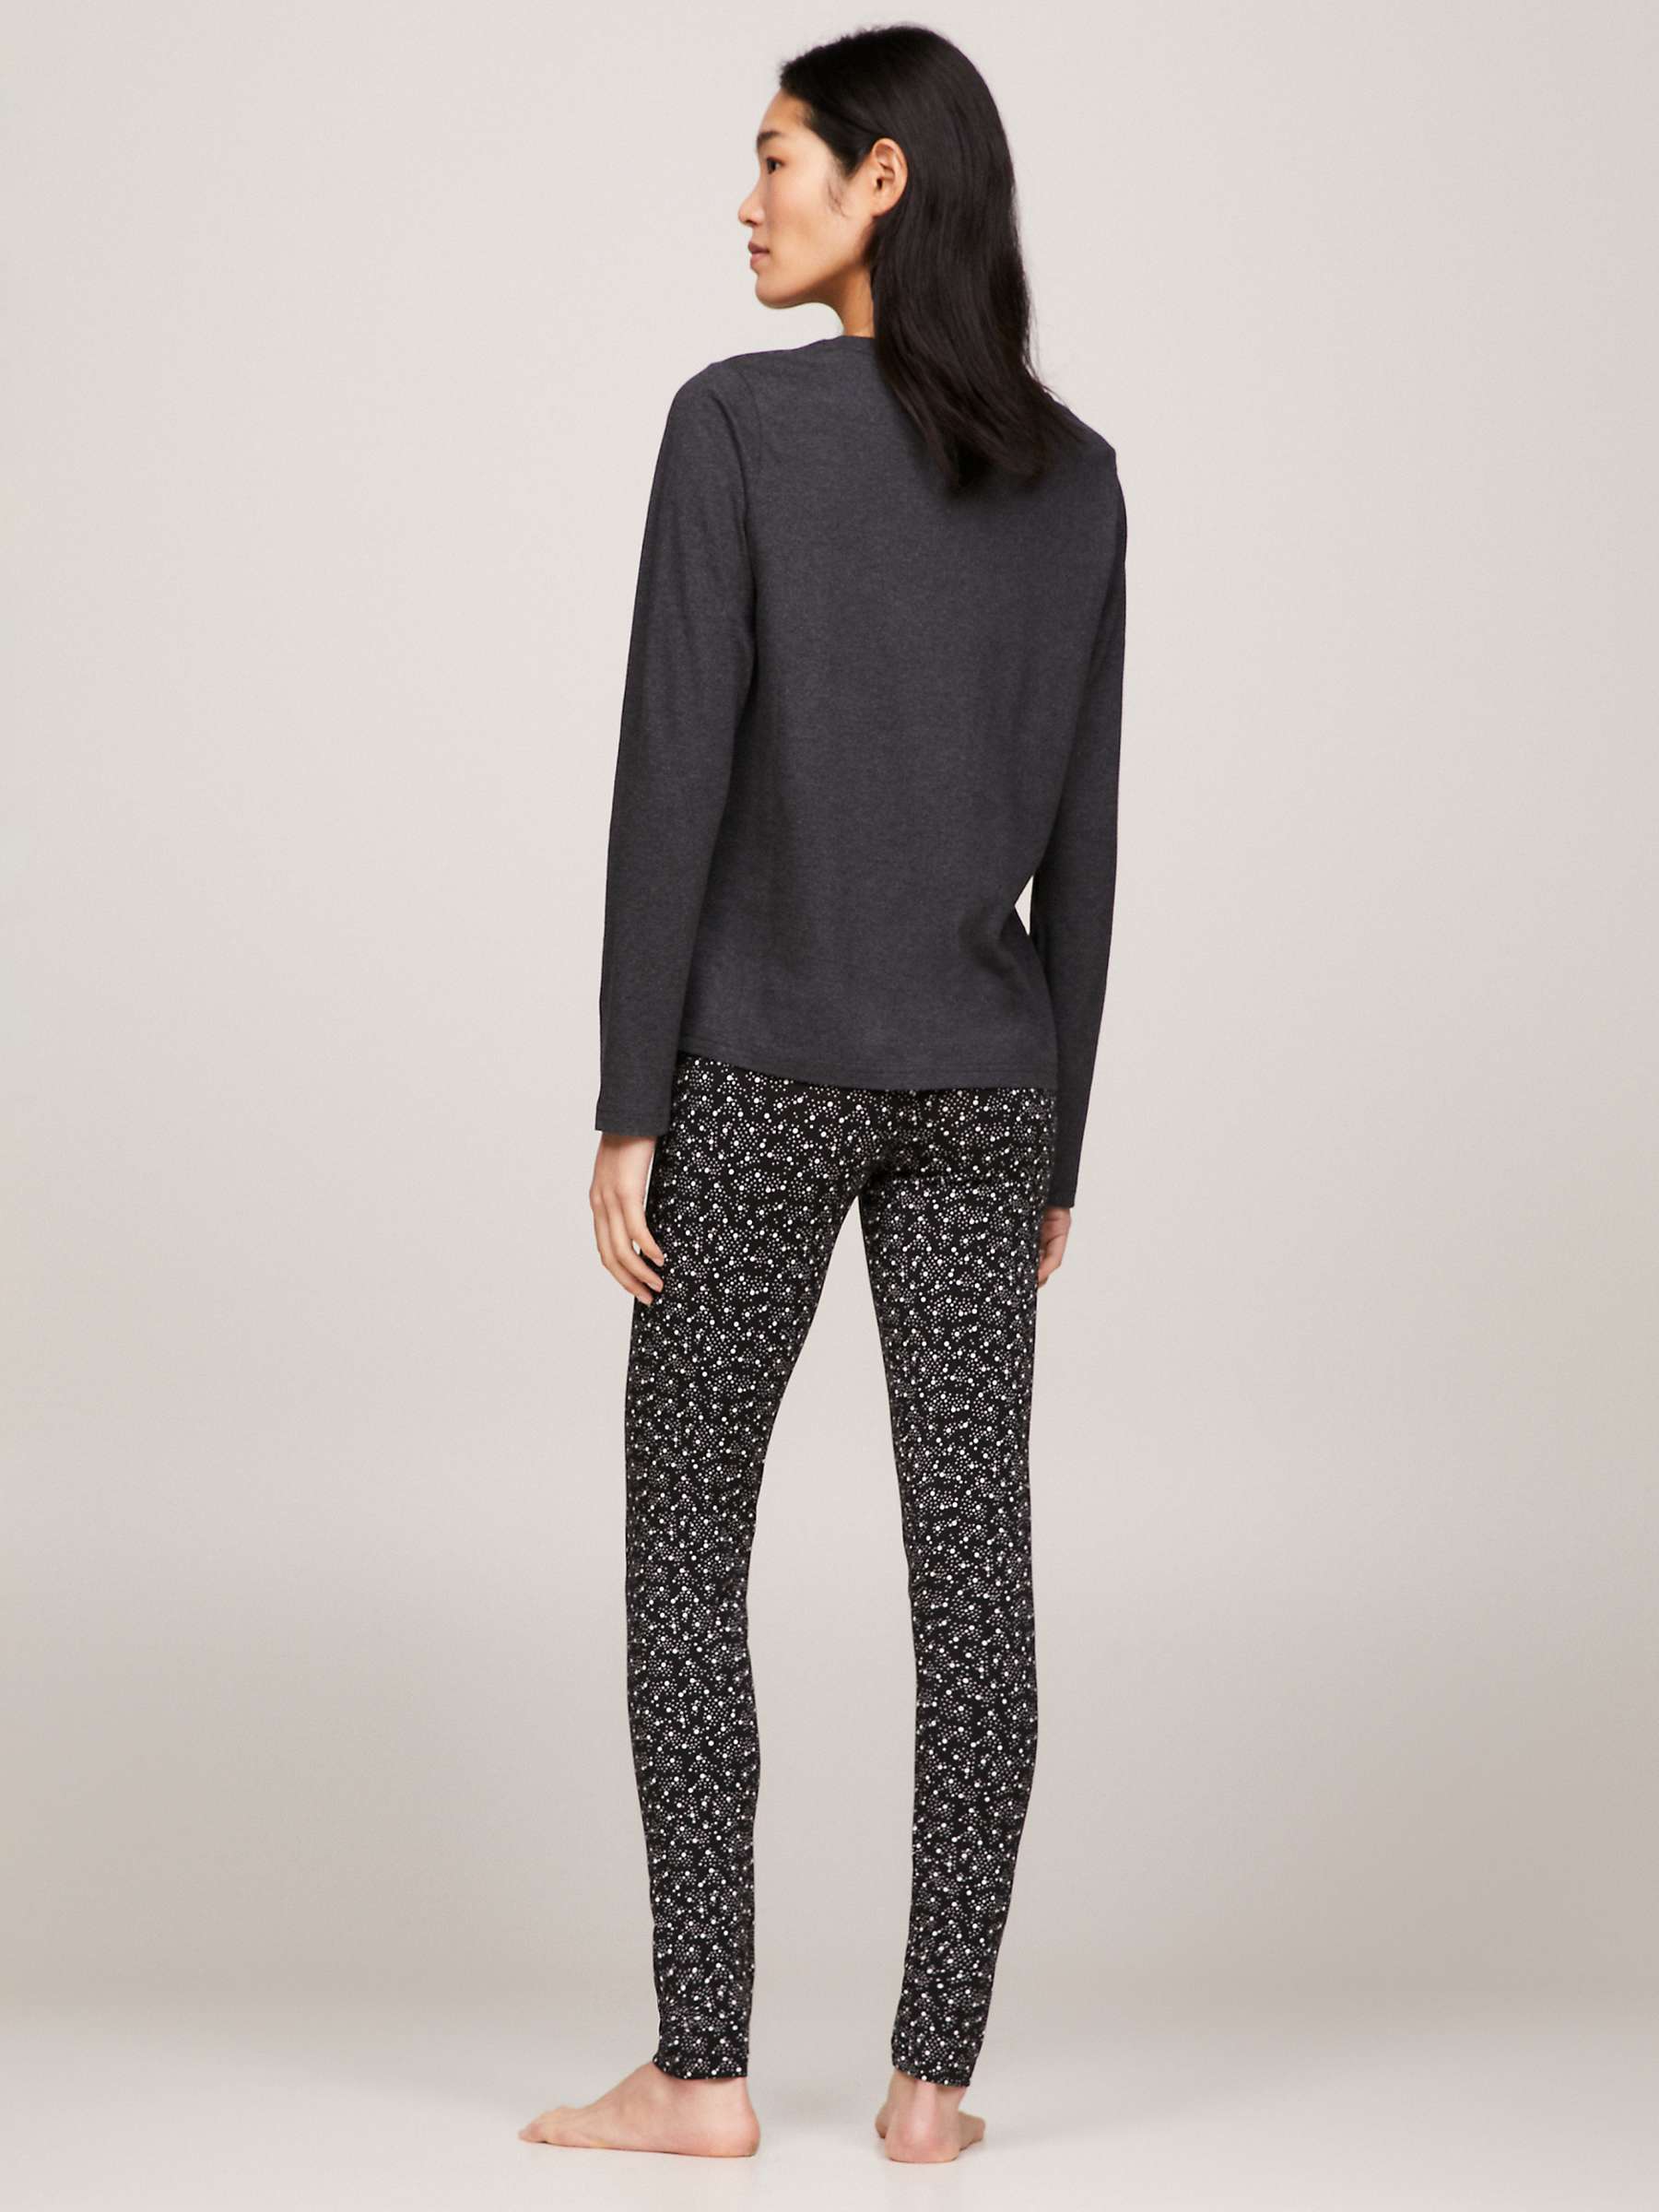 Tommy Hilfiger Long Sleeve T-Shirt & Leggings Pyjama Set, Dark Gray/Multi  at John Lewis & Partners